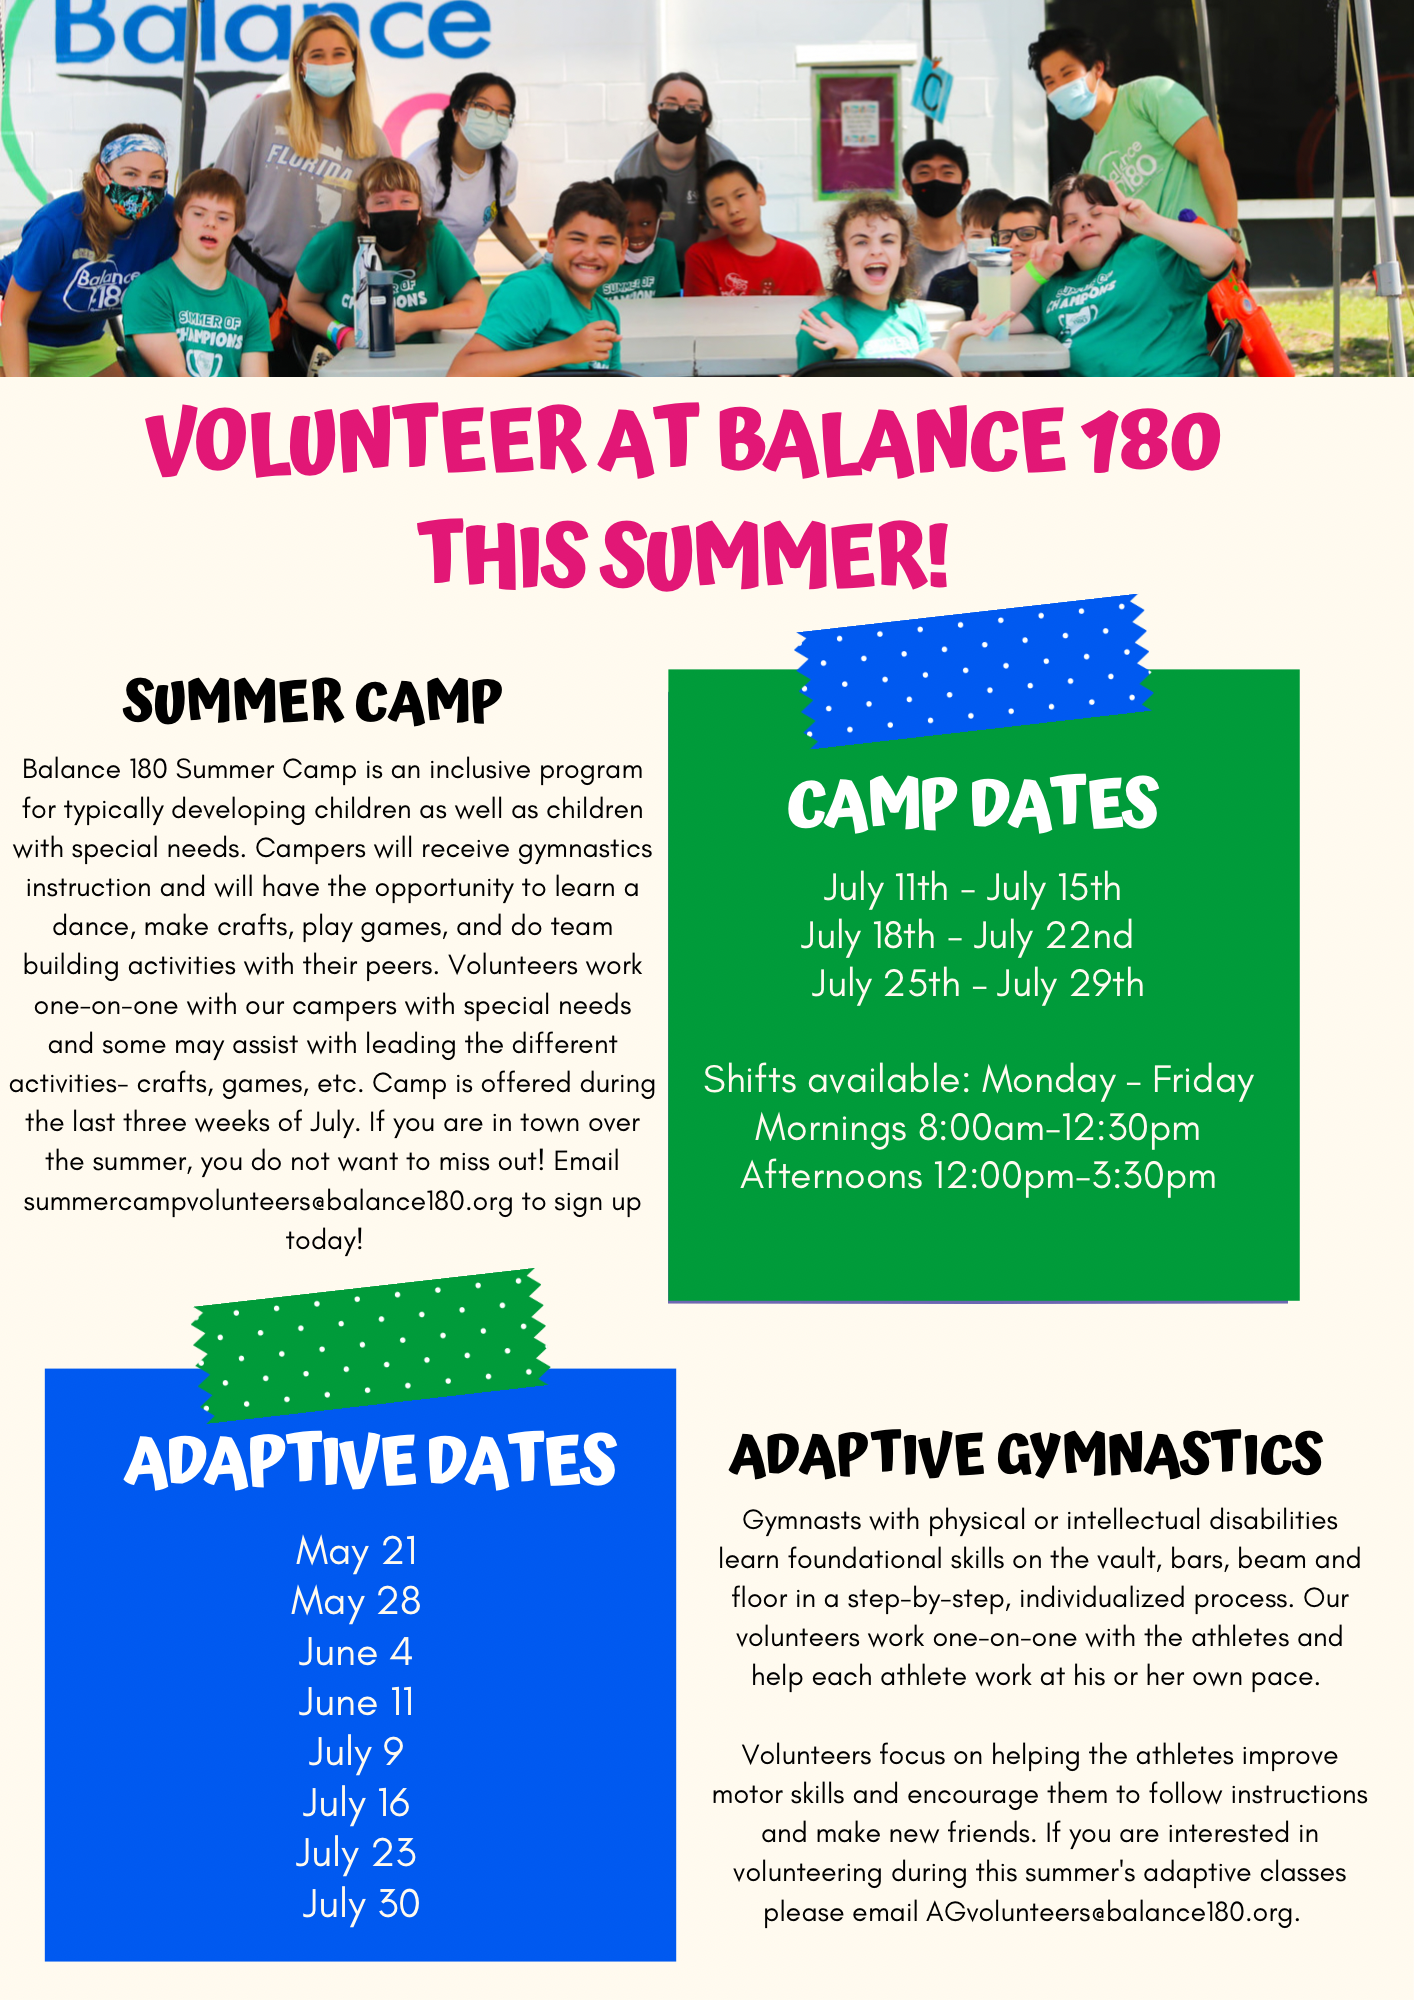 Volunteer at Balance 180 This Summer!